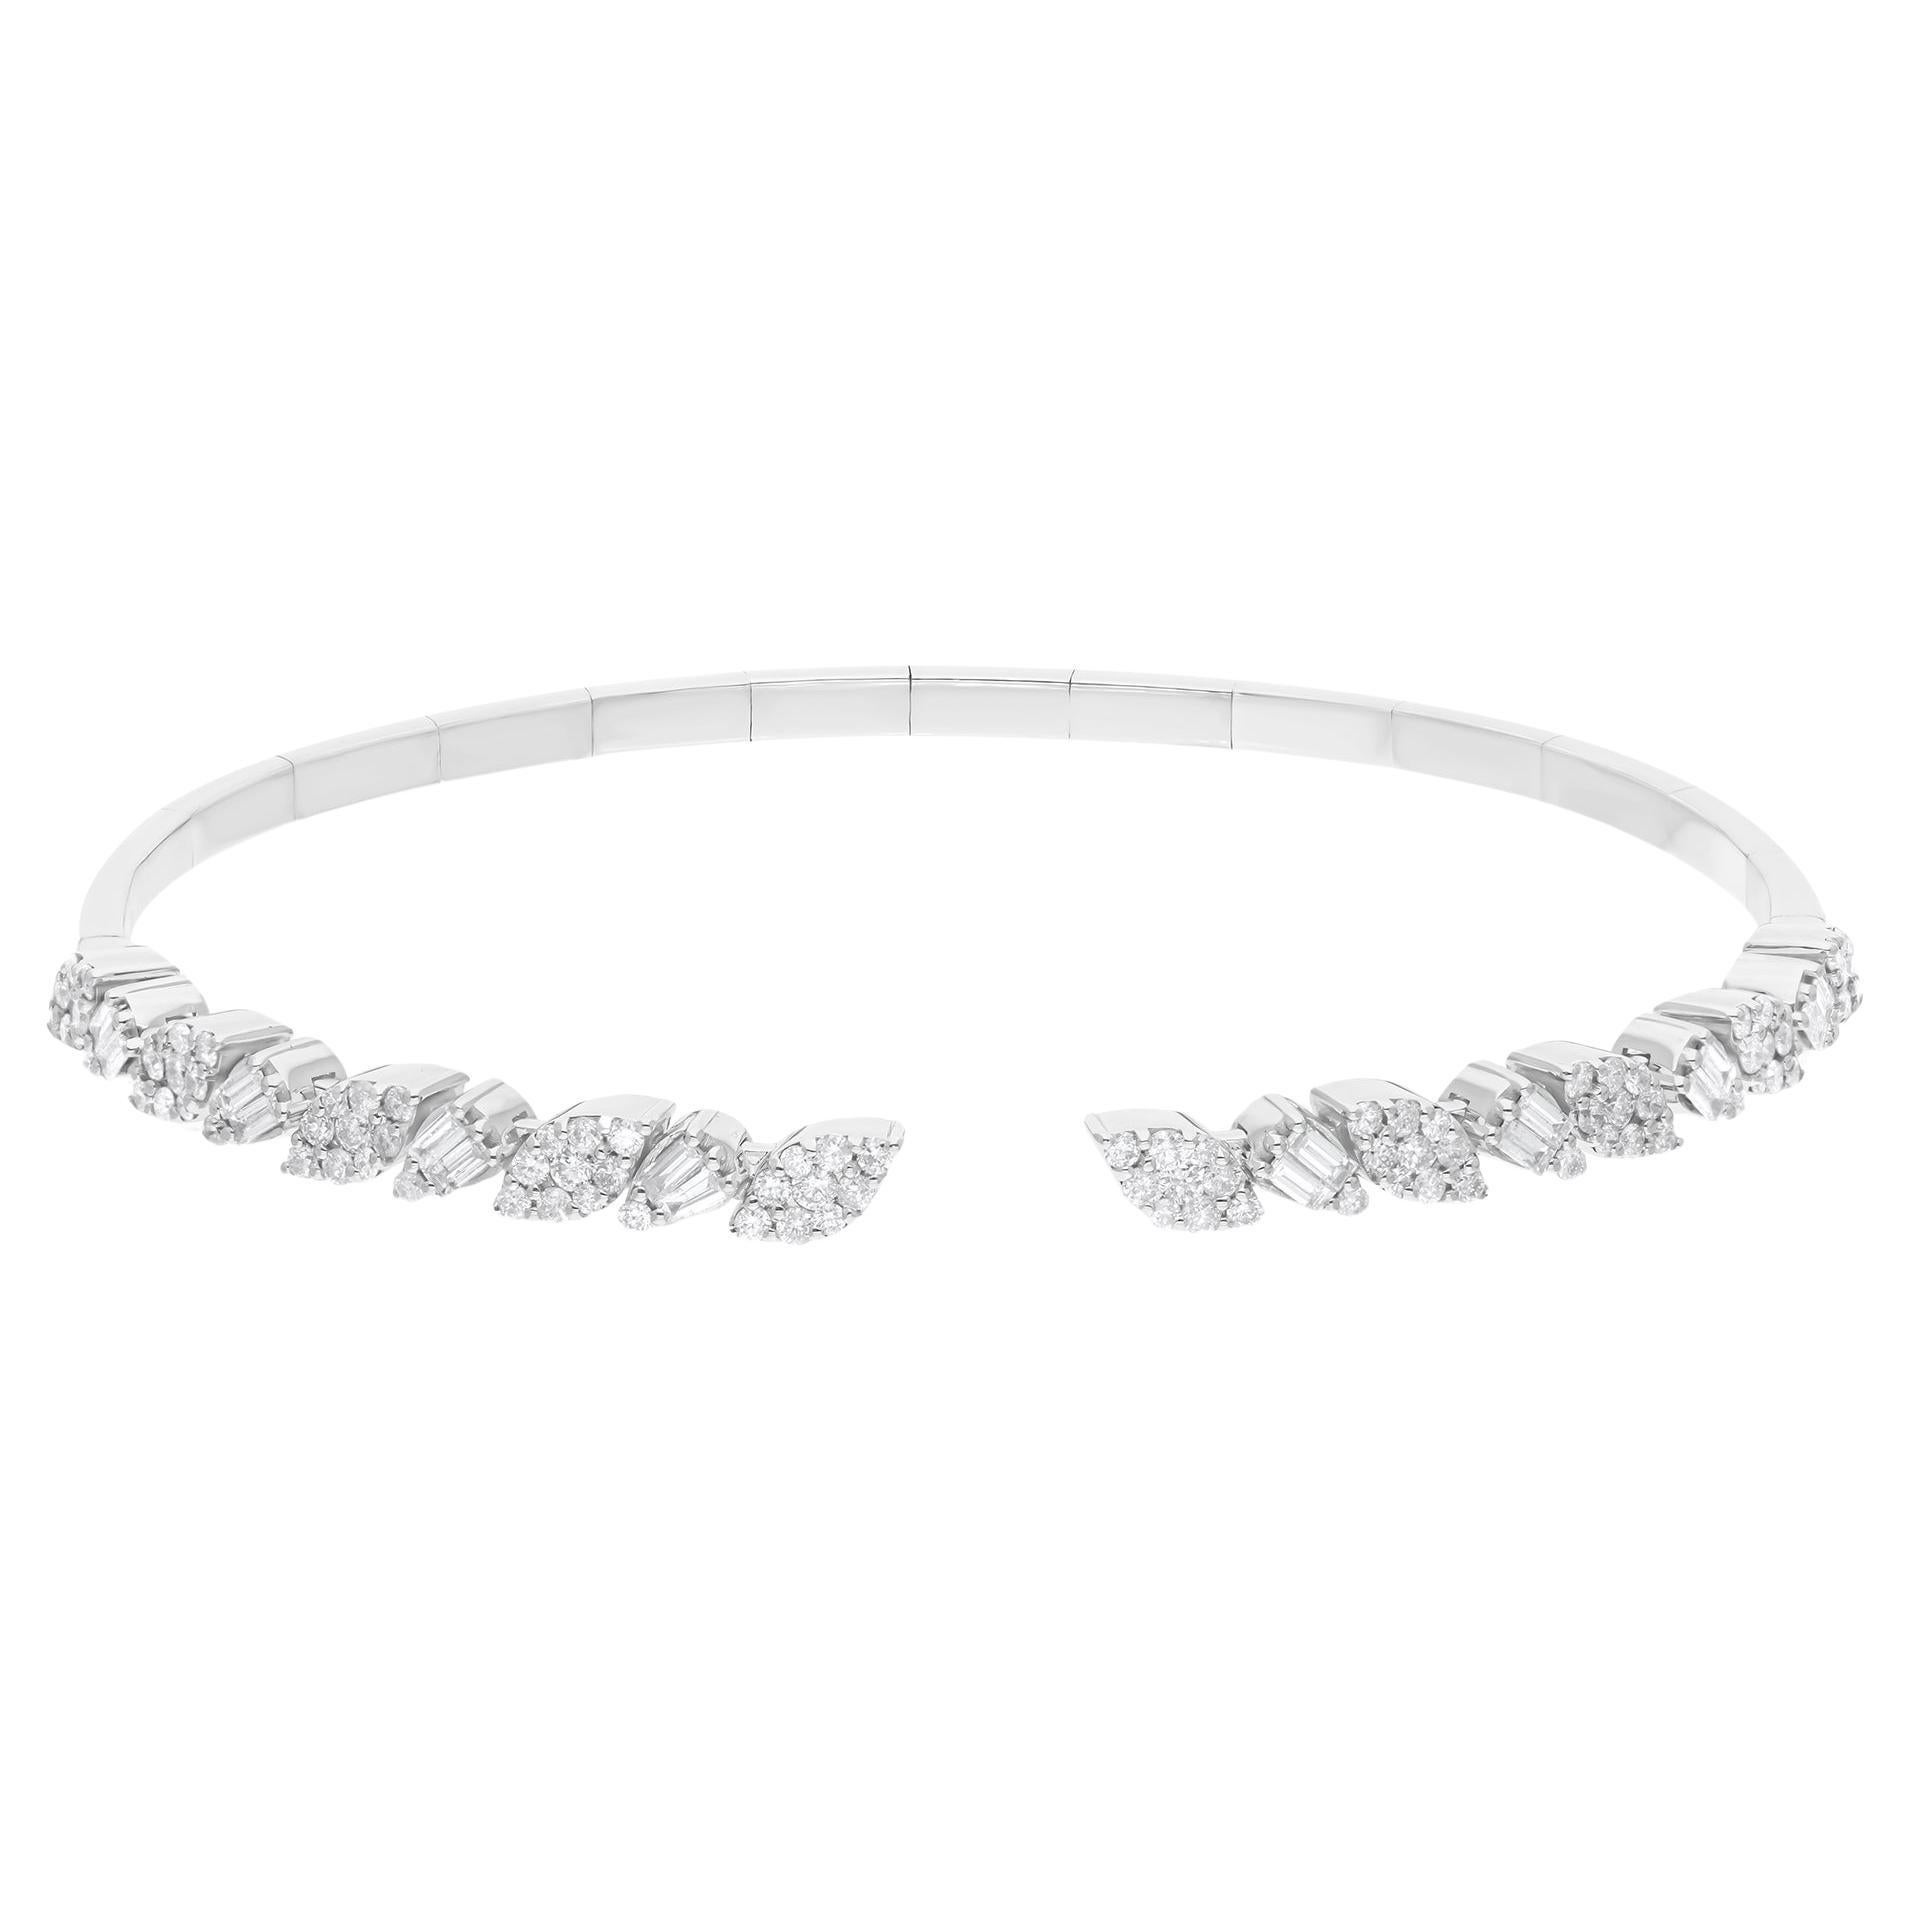 Baguette & Round Diamond Open Bangle 18 Karat White Gold Cuff Bracelet Jewelry